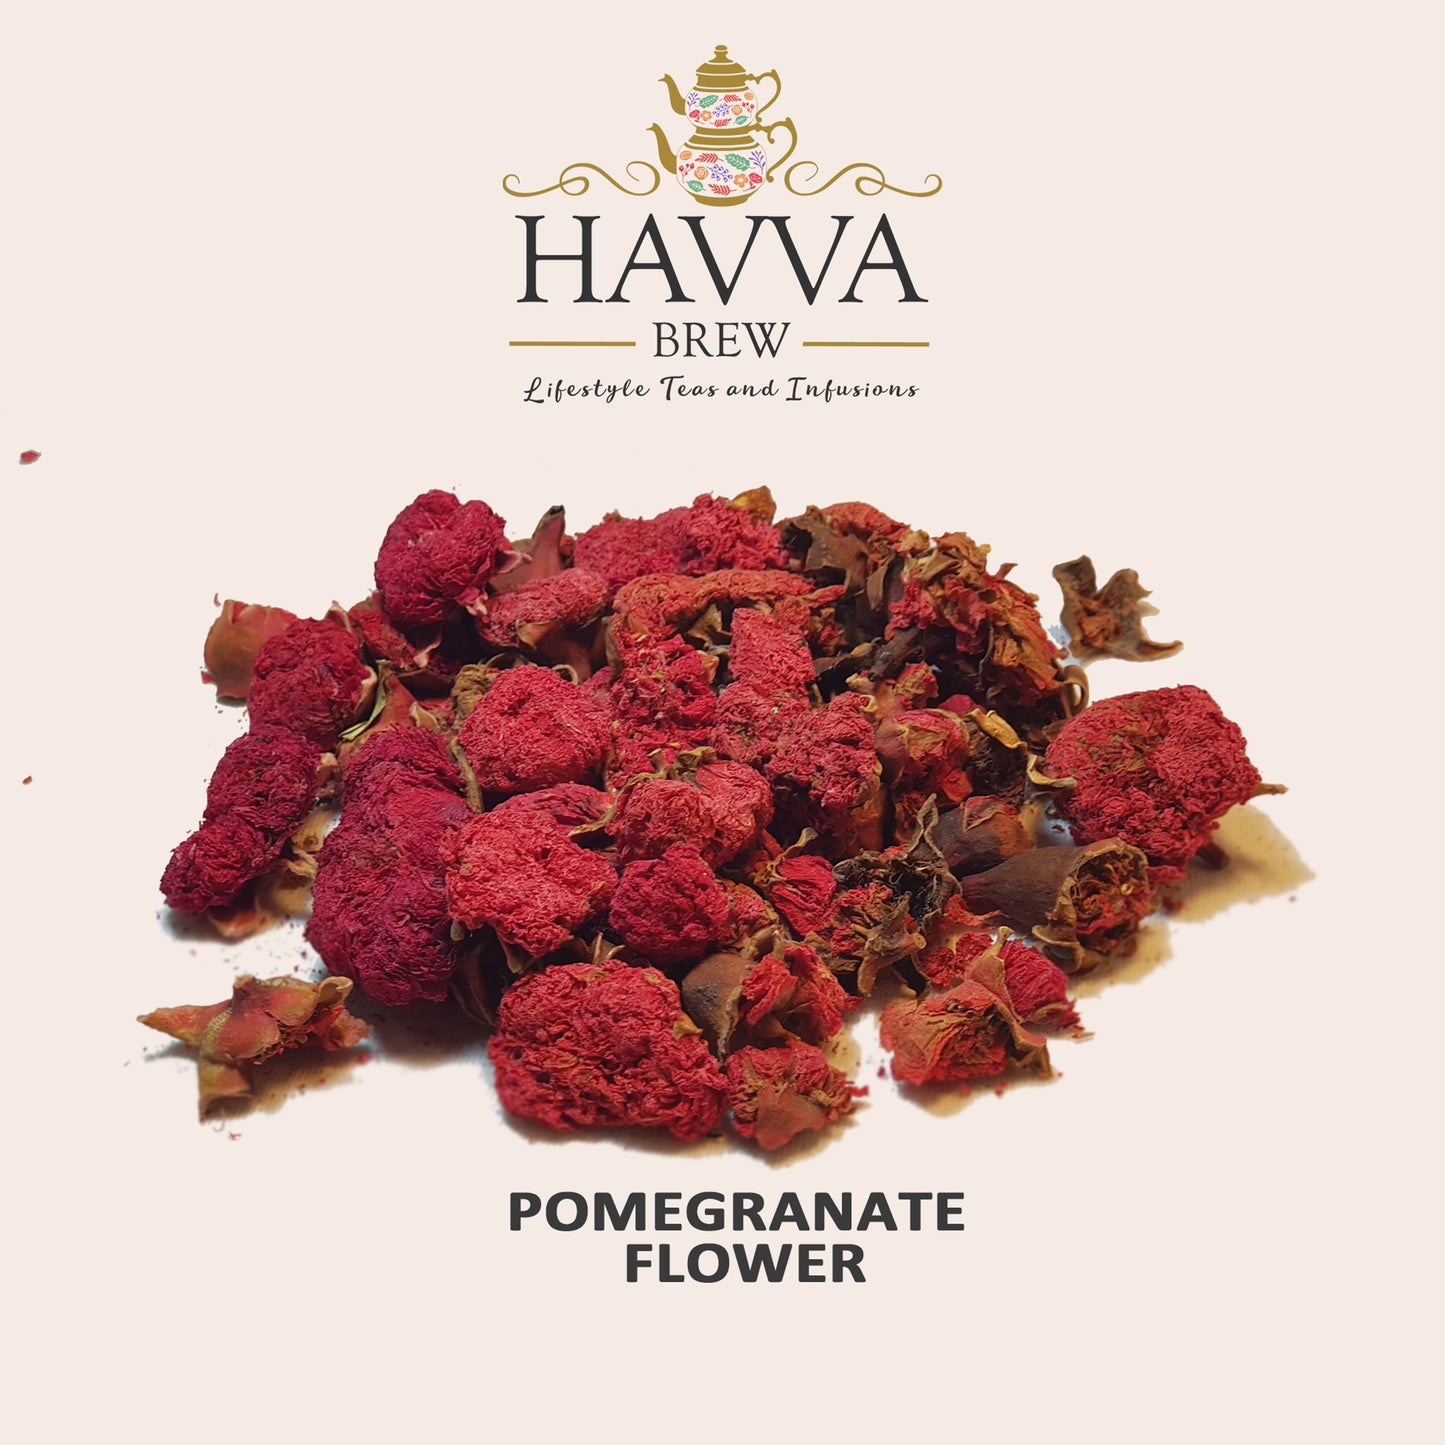 Pomegranate Flower Tea (Caffeine-Free)